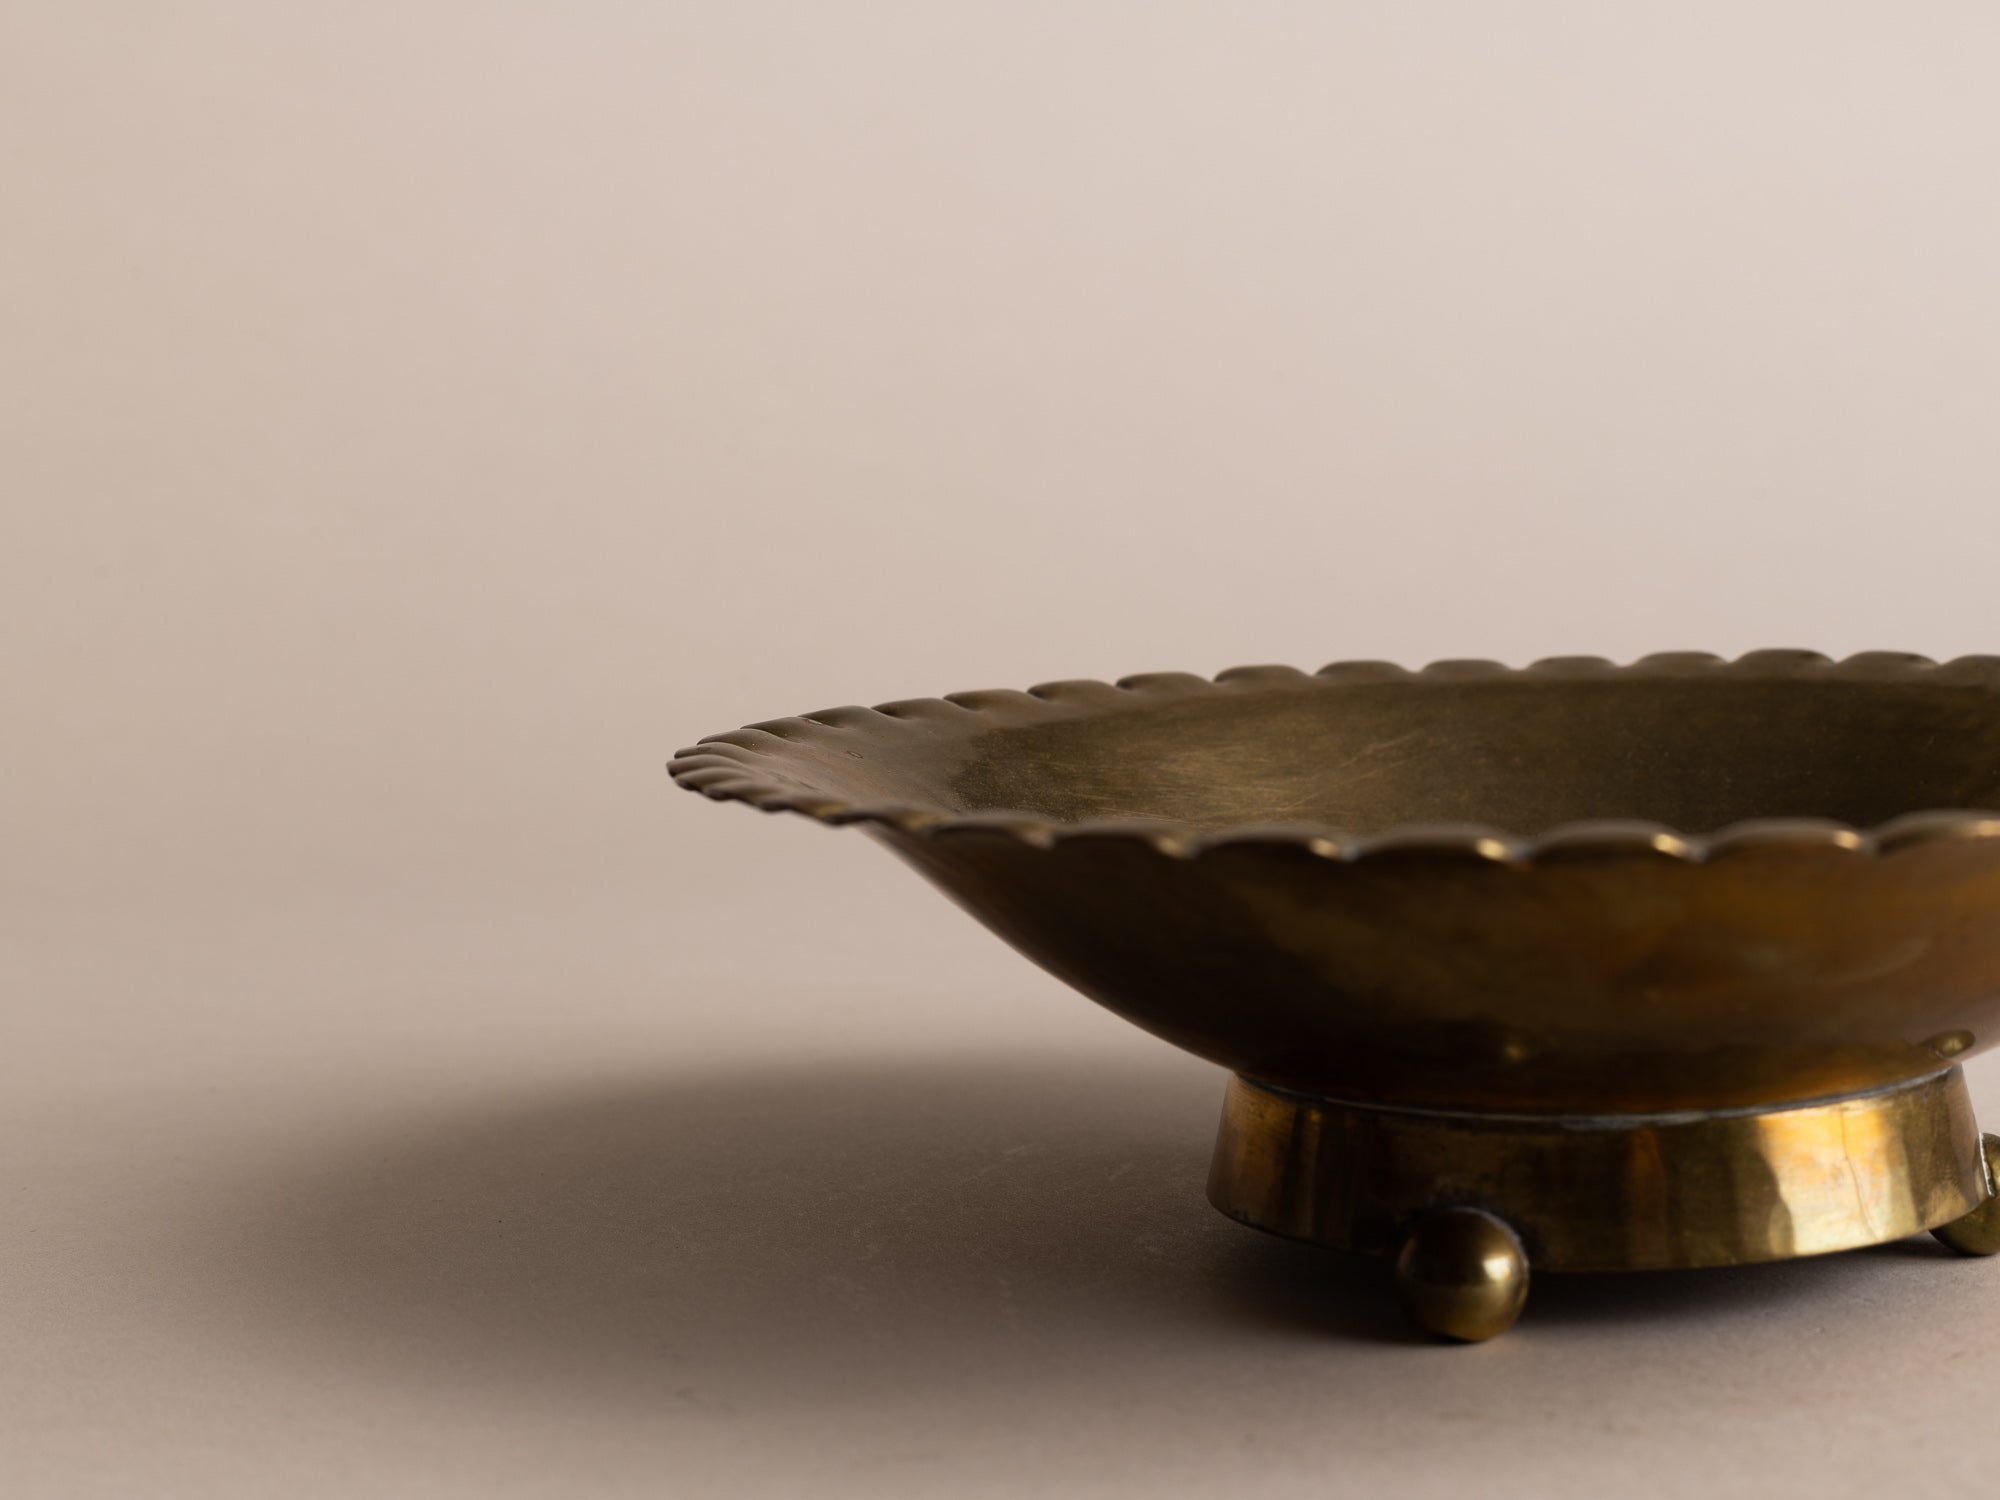 Coupe en laiton par Alois Wörle & Neues Münchner Kunstgewerbe, Allemagne (vers 1920)..Brass bowl by Alois Wörle & Neues Münchner Kunstgewerbe, Germany (circa 1920)